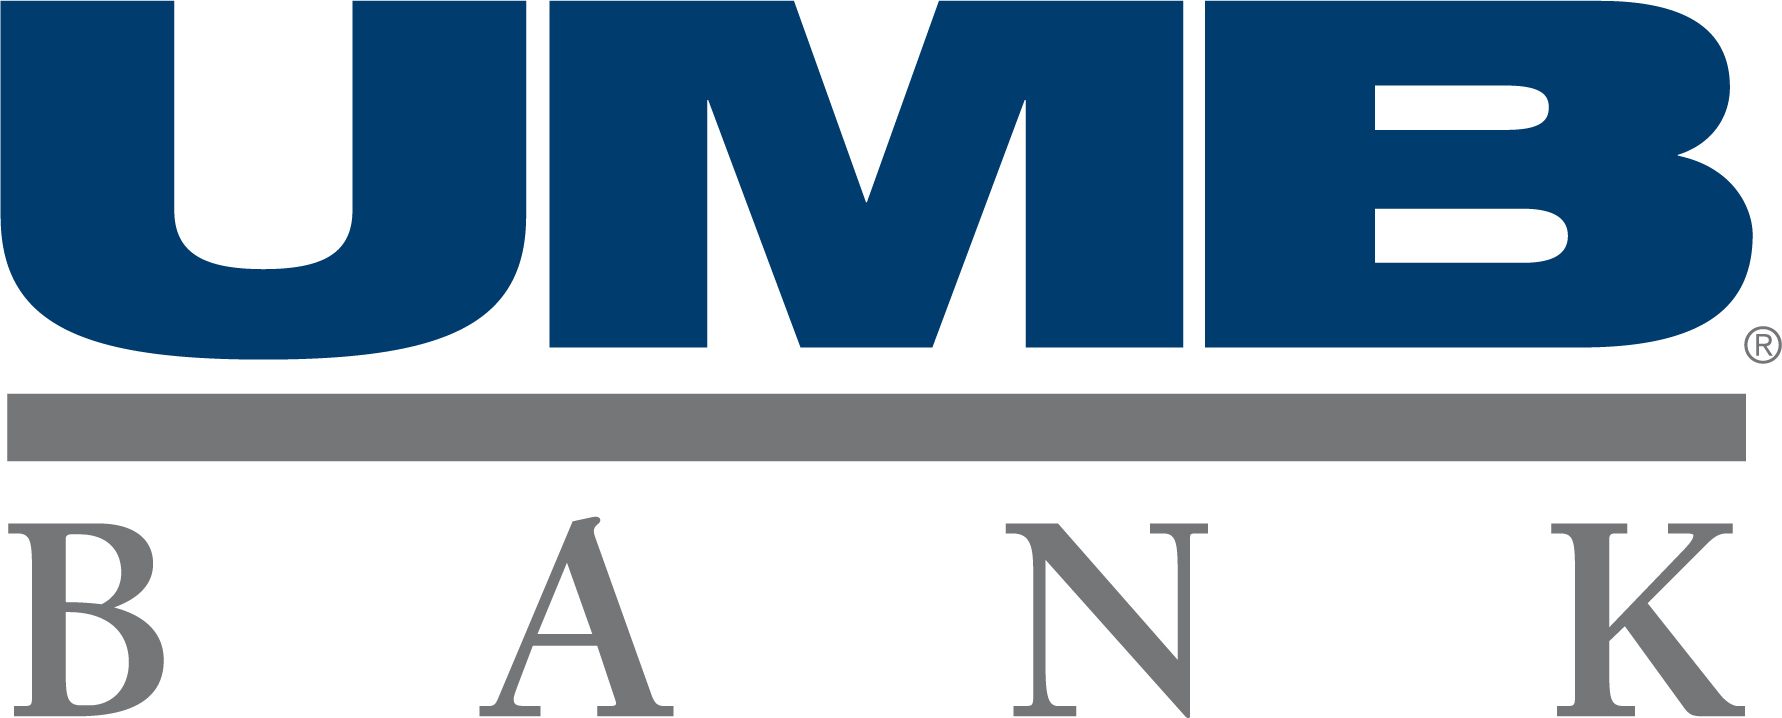 UMB Bank logo